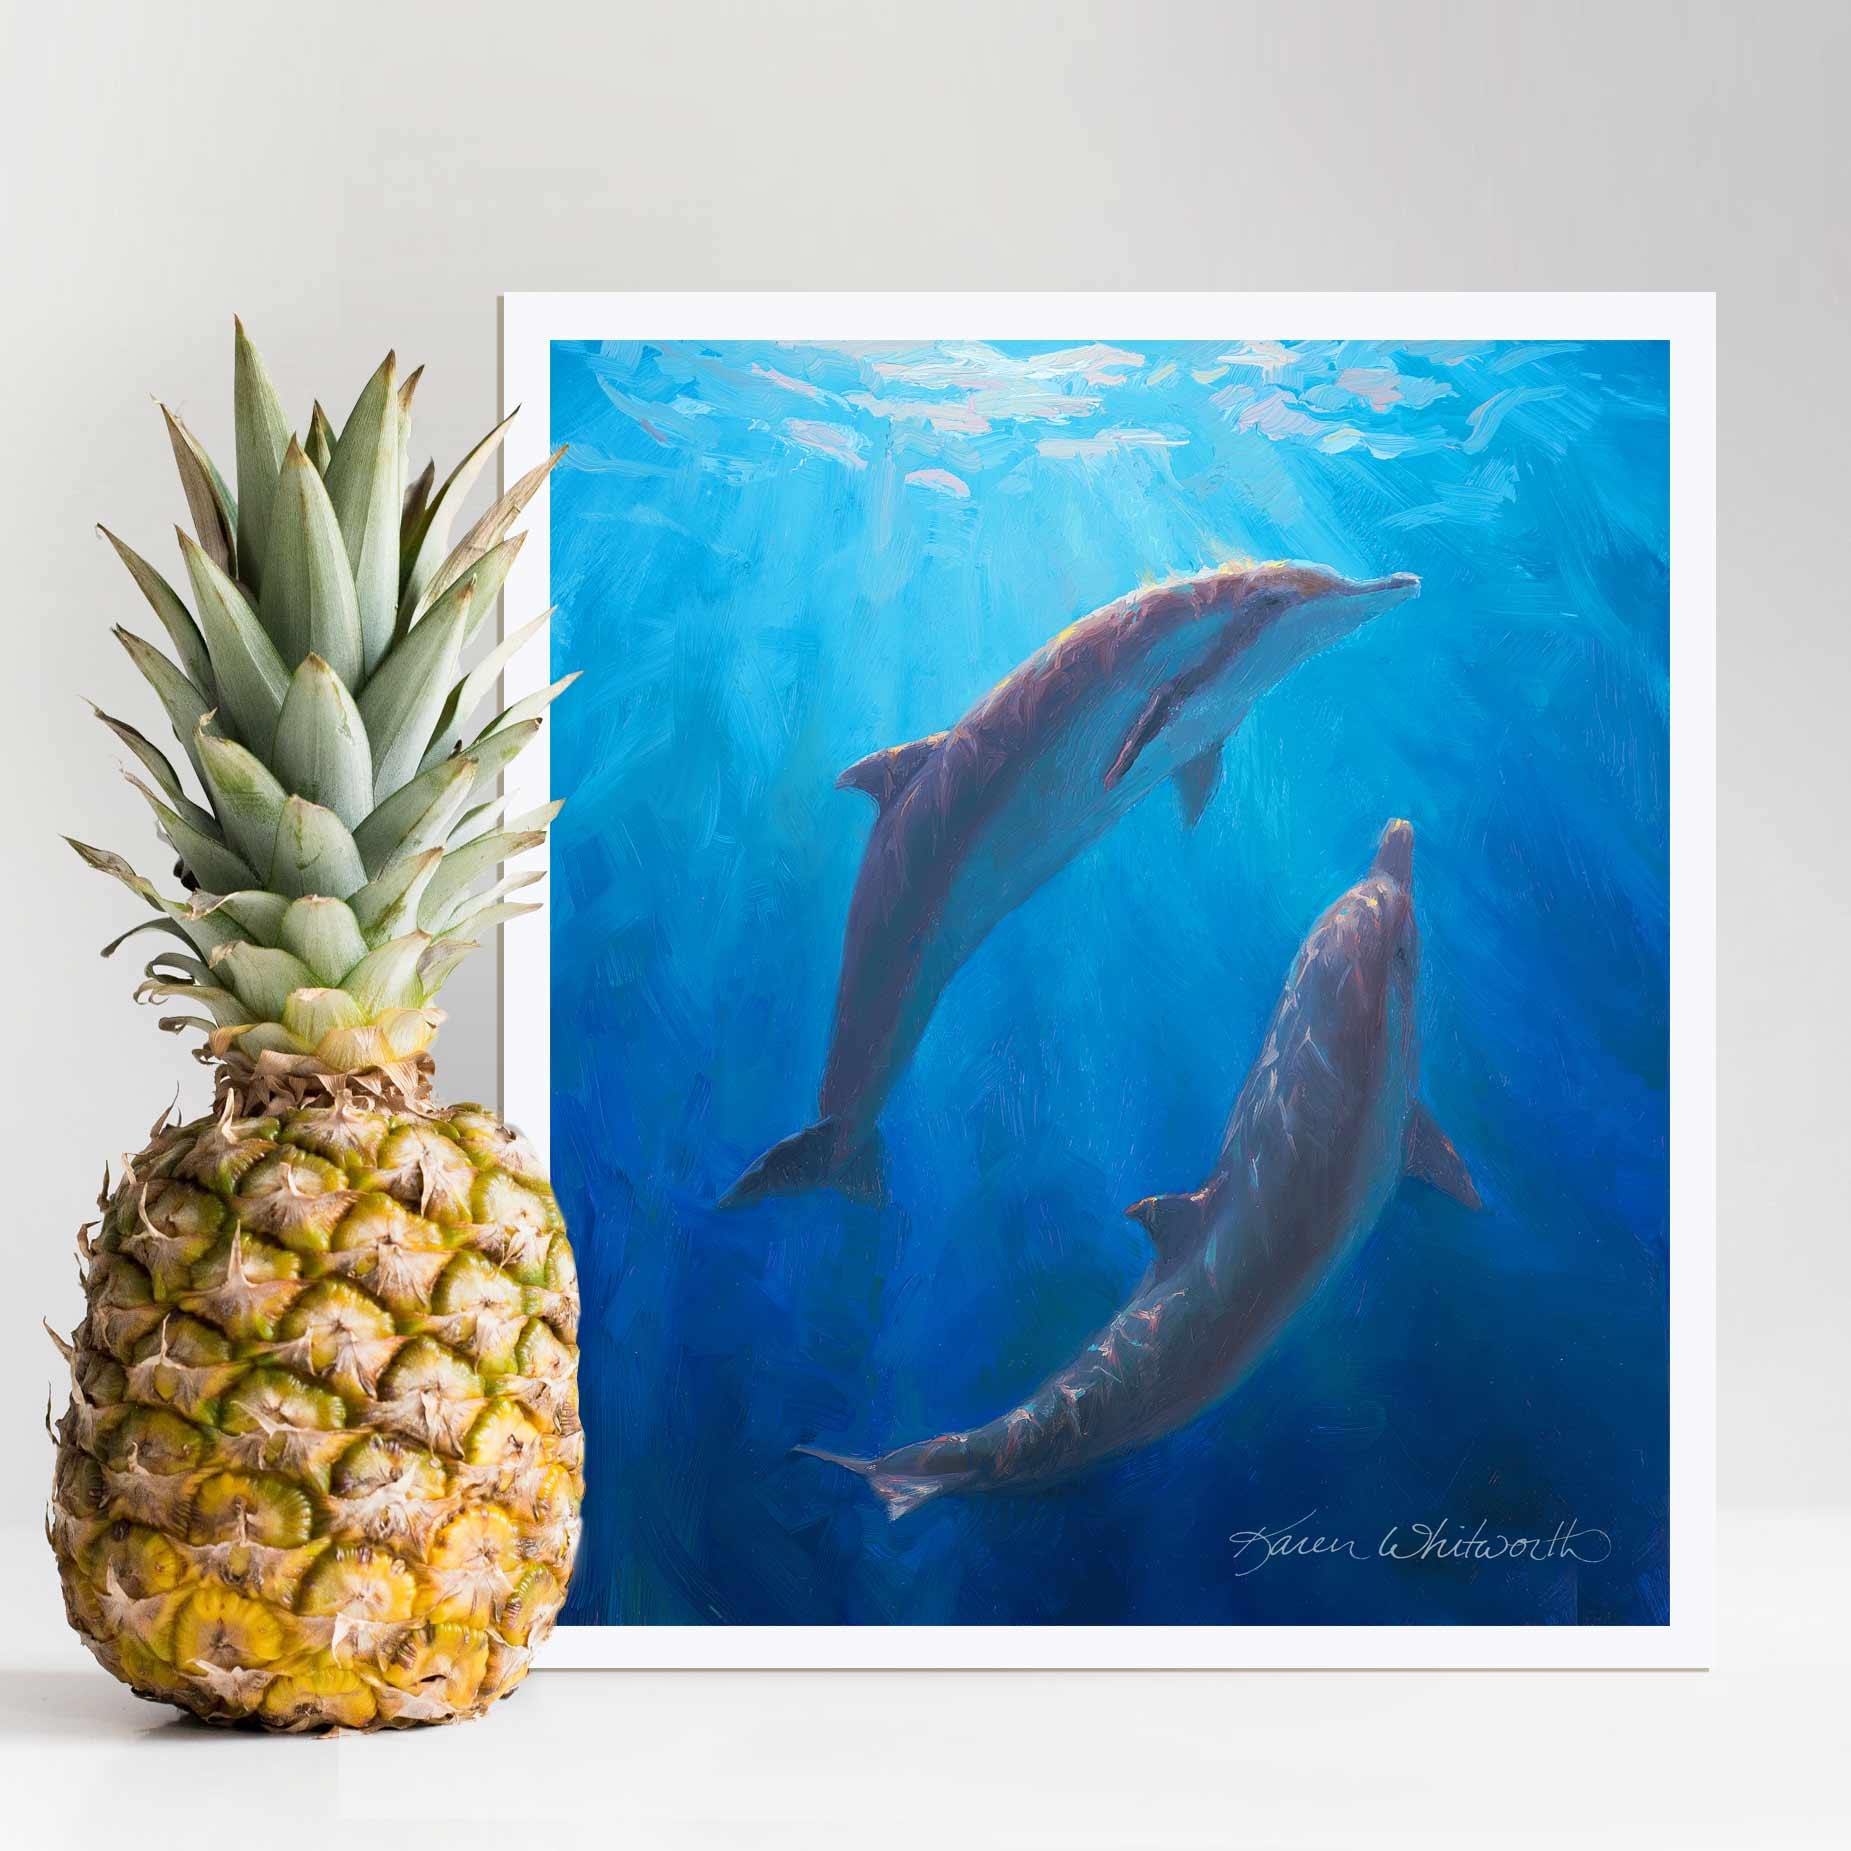 11x14 Matted Underwater dolphin wall art print of whales by ocean artist Karen Whitworth